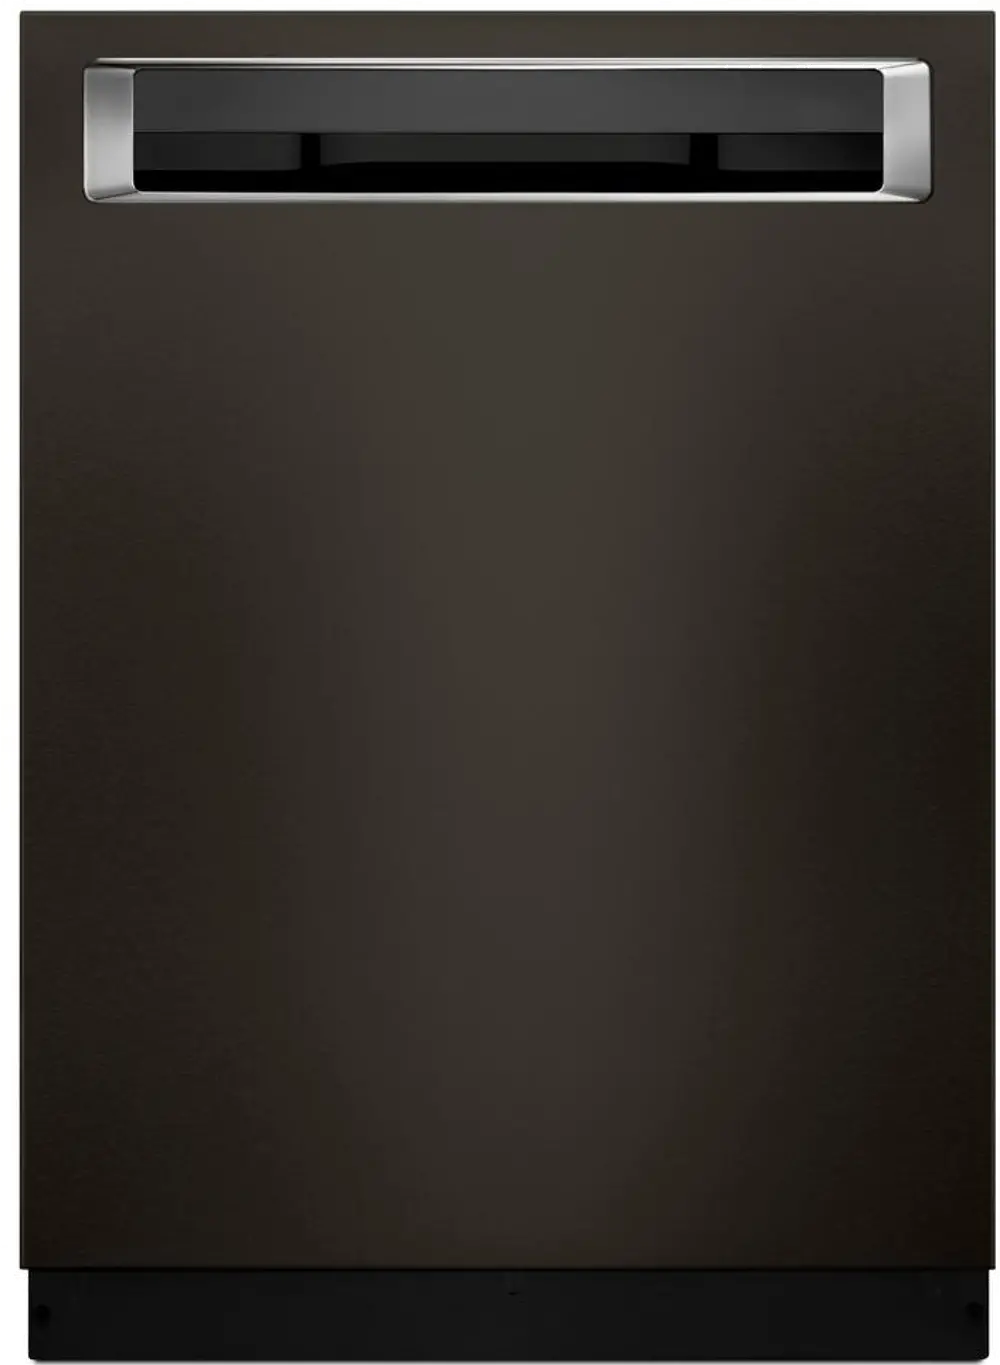 KDPE334GBS KitchenAid Dishwasher - Black Stainless Steel-1